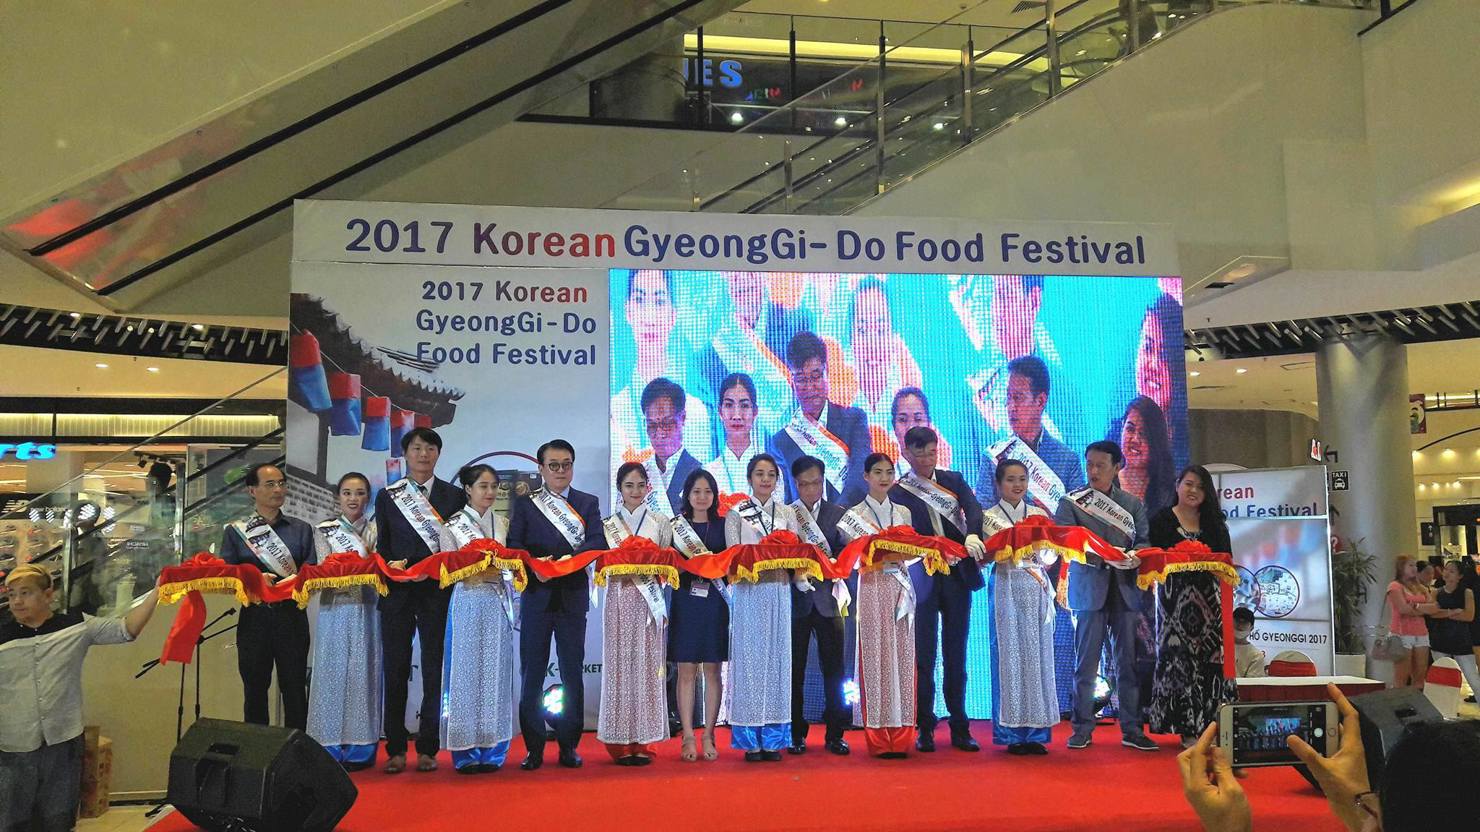 Lễ cắt băng khai mạc sự kiện “Korean Gyeonggi-do Food Festival” tại Hà Nội.